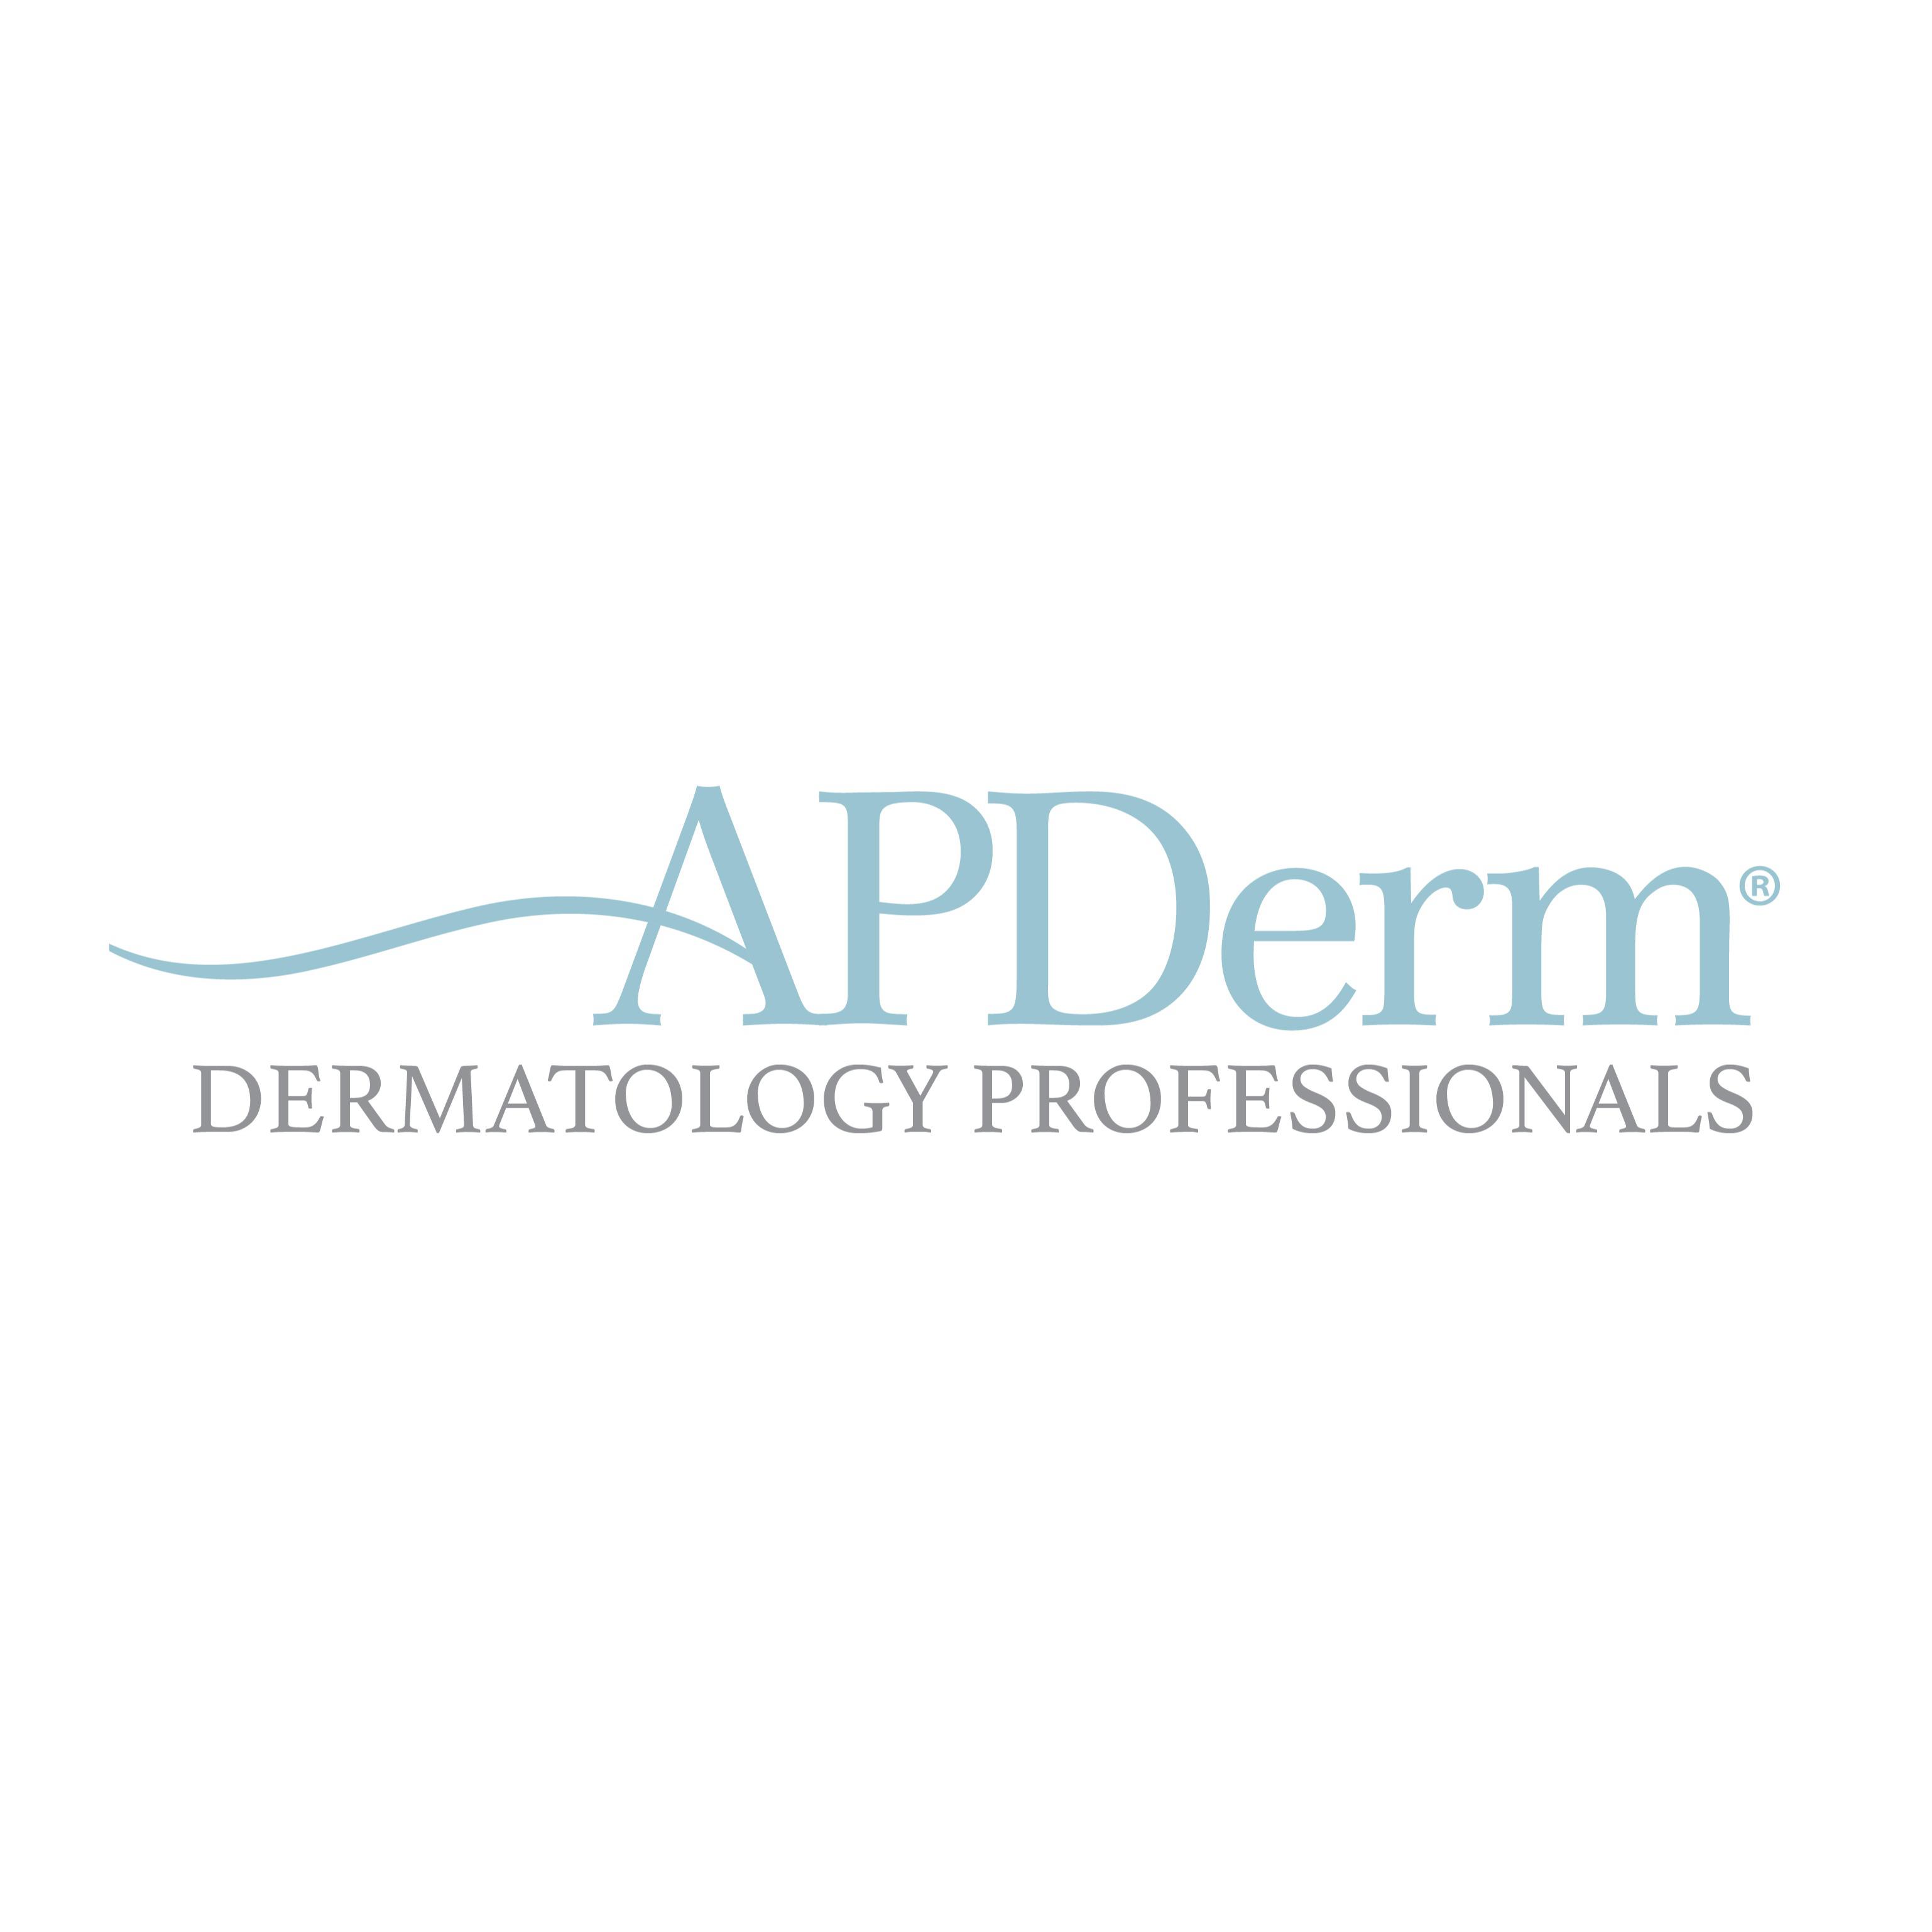 Dermatology Professionals, Inc